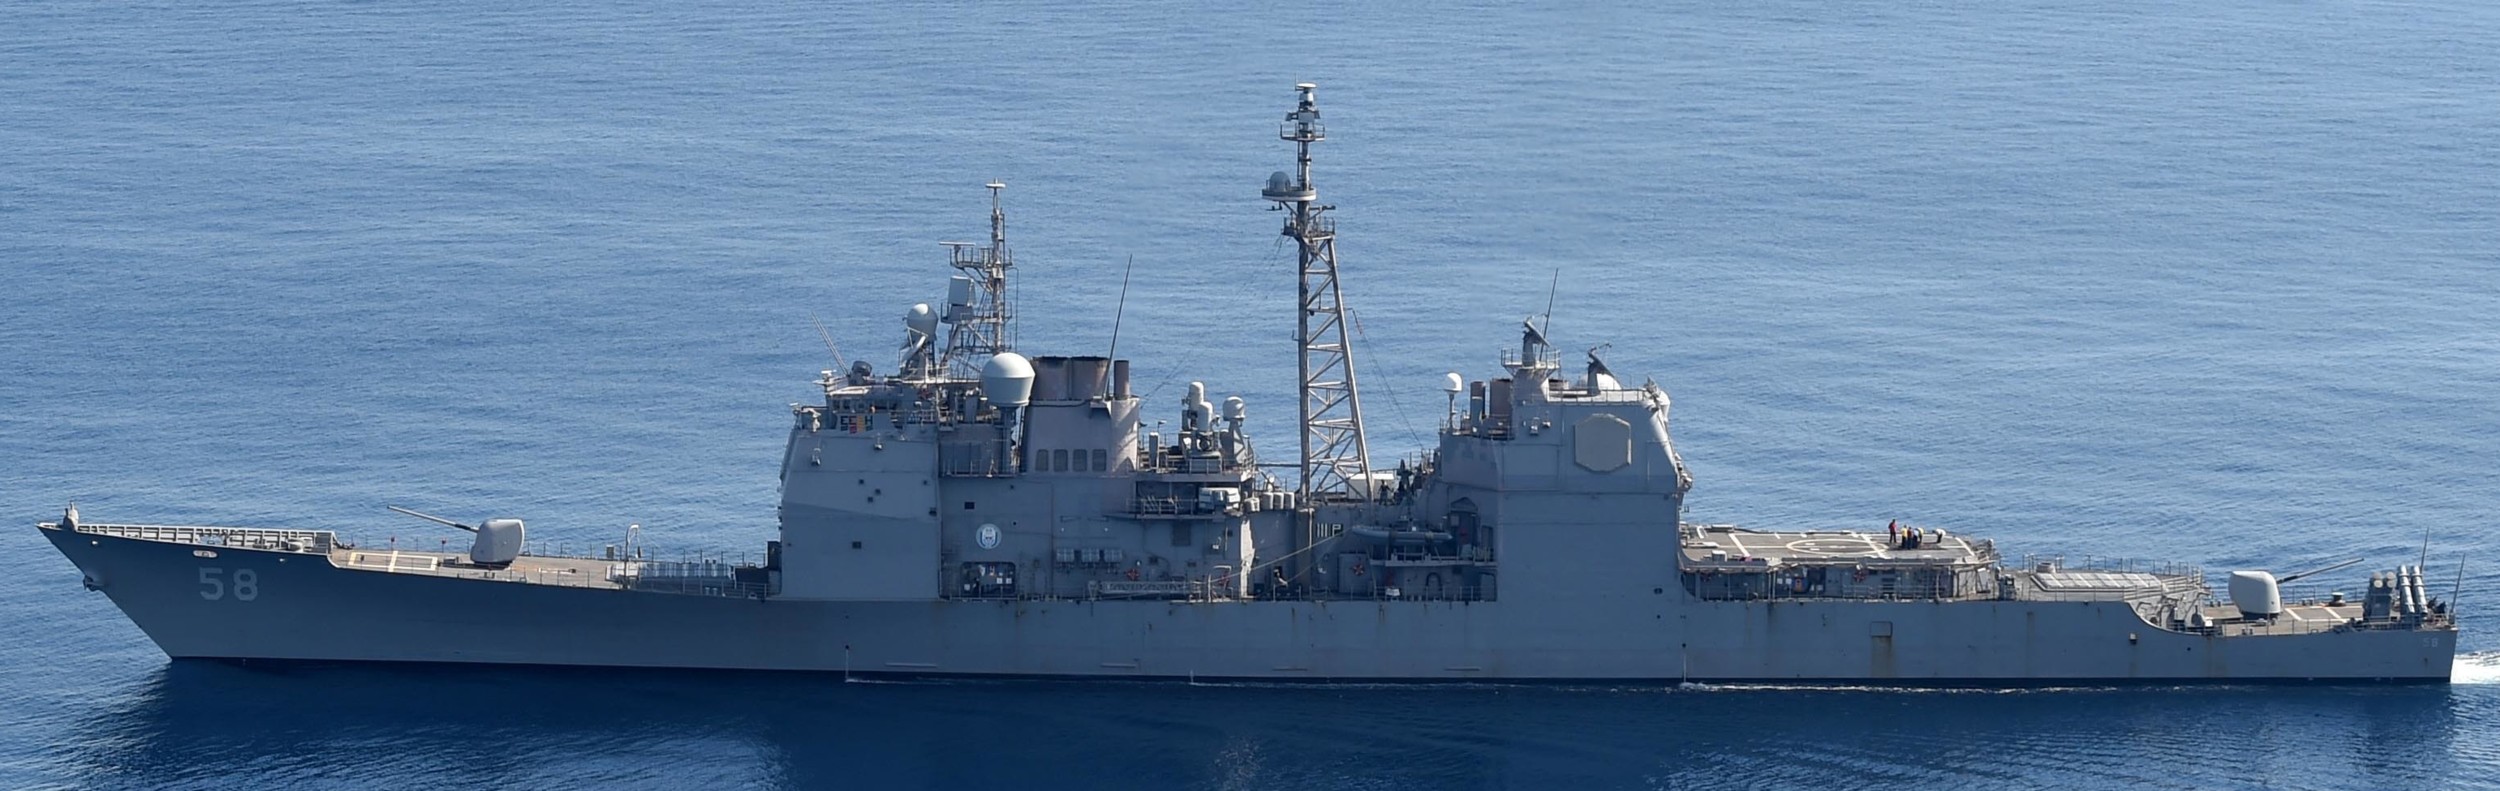 cg-58 uss philippine sea ticonderoga class guided missile cruiser aegis us navy mediterranean sea 59